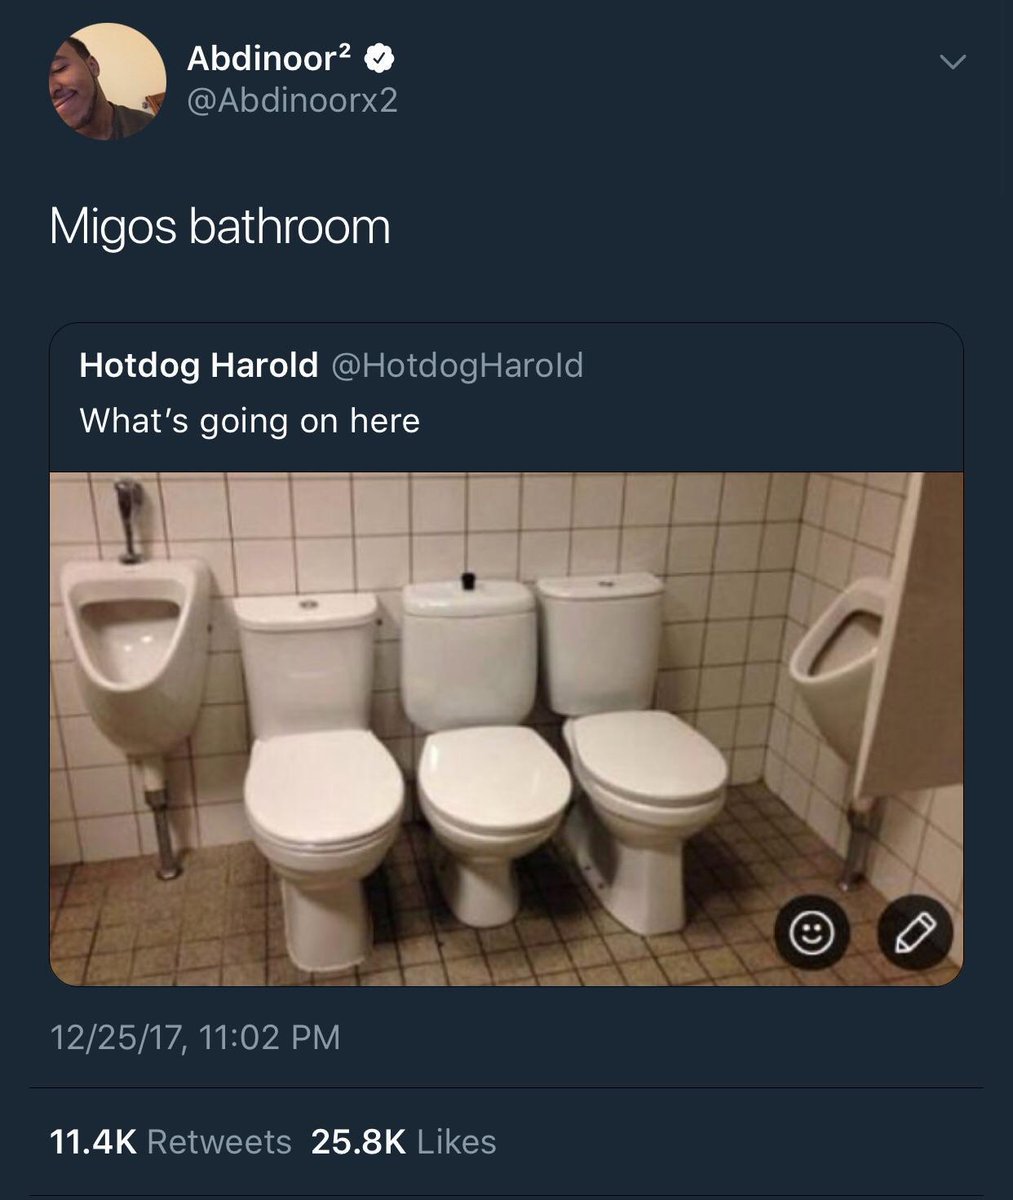 Dank Memes on X: I sit on the toilet  / X